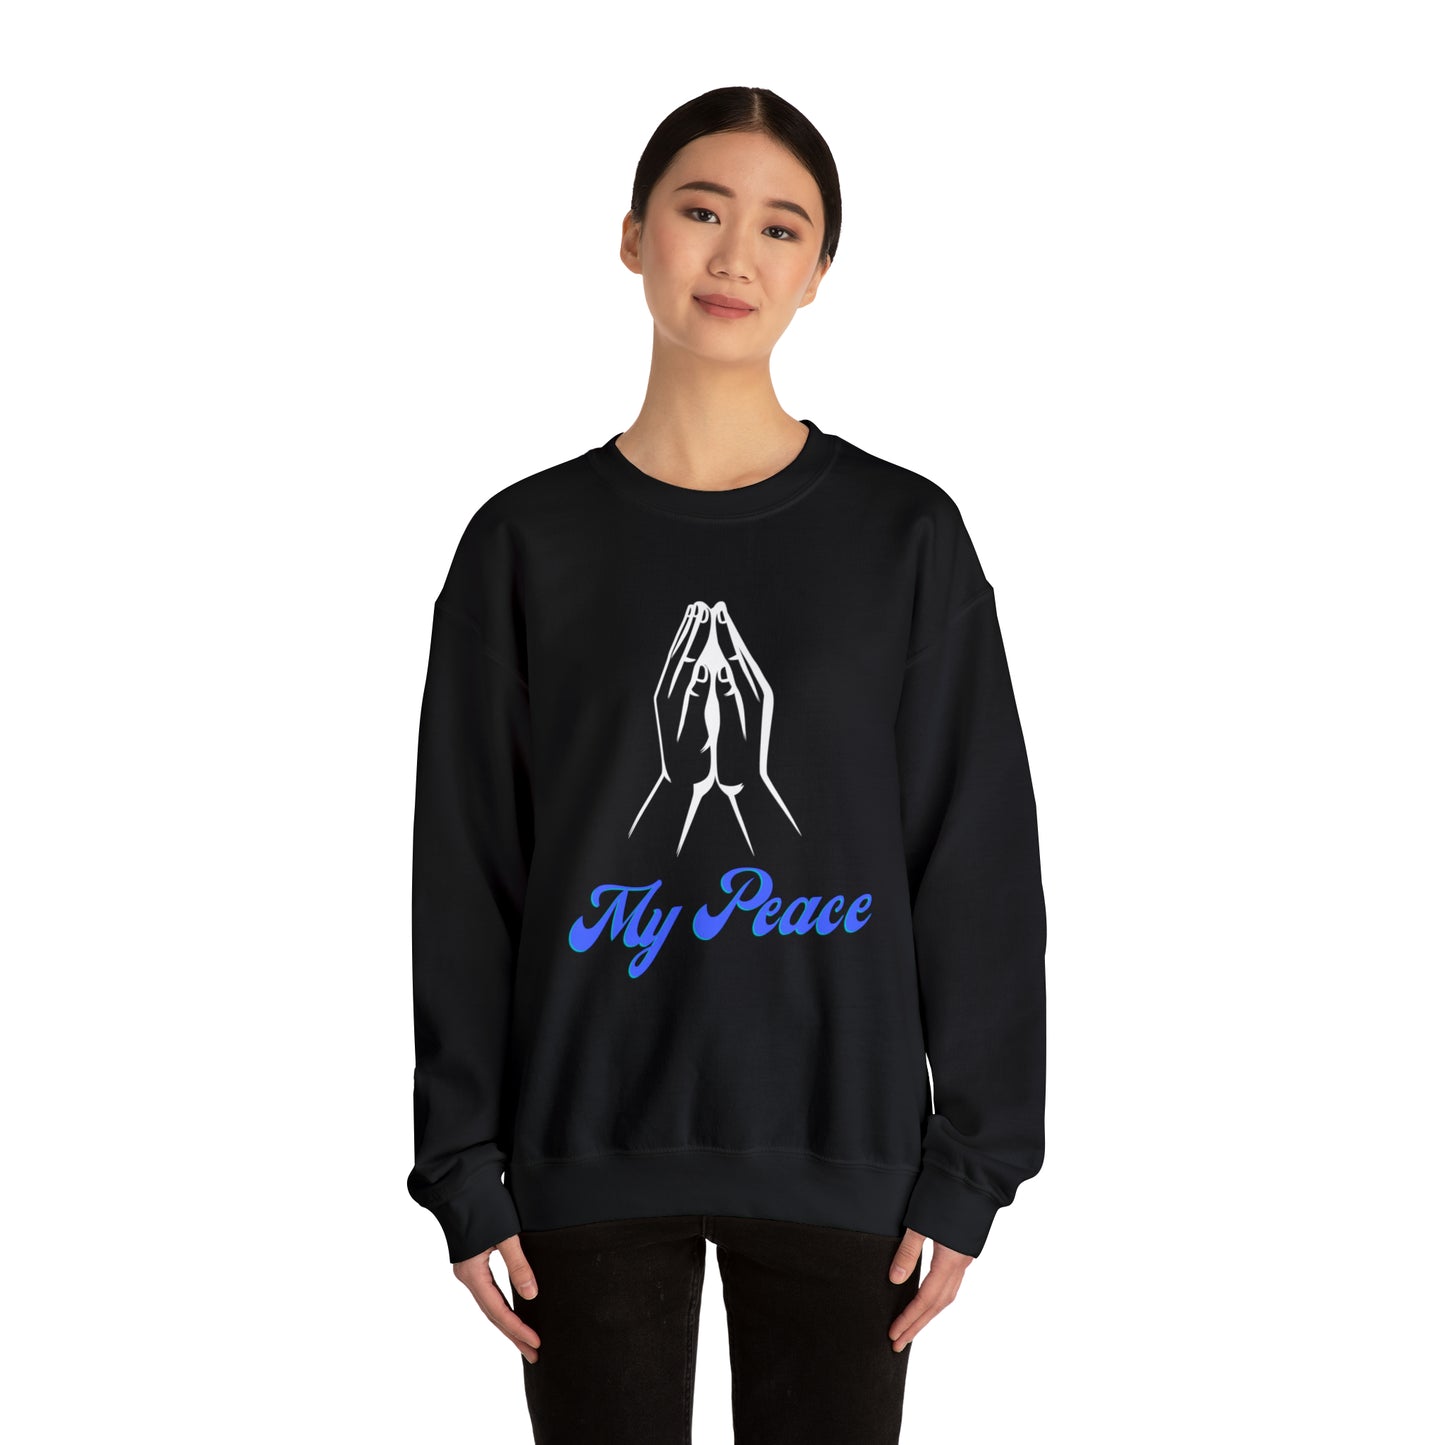 Praying Hands design crewneck sweatshirt